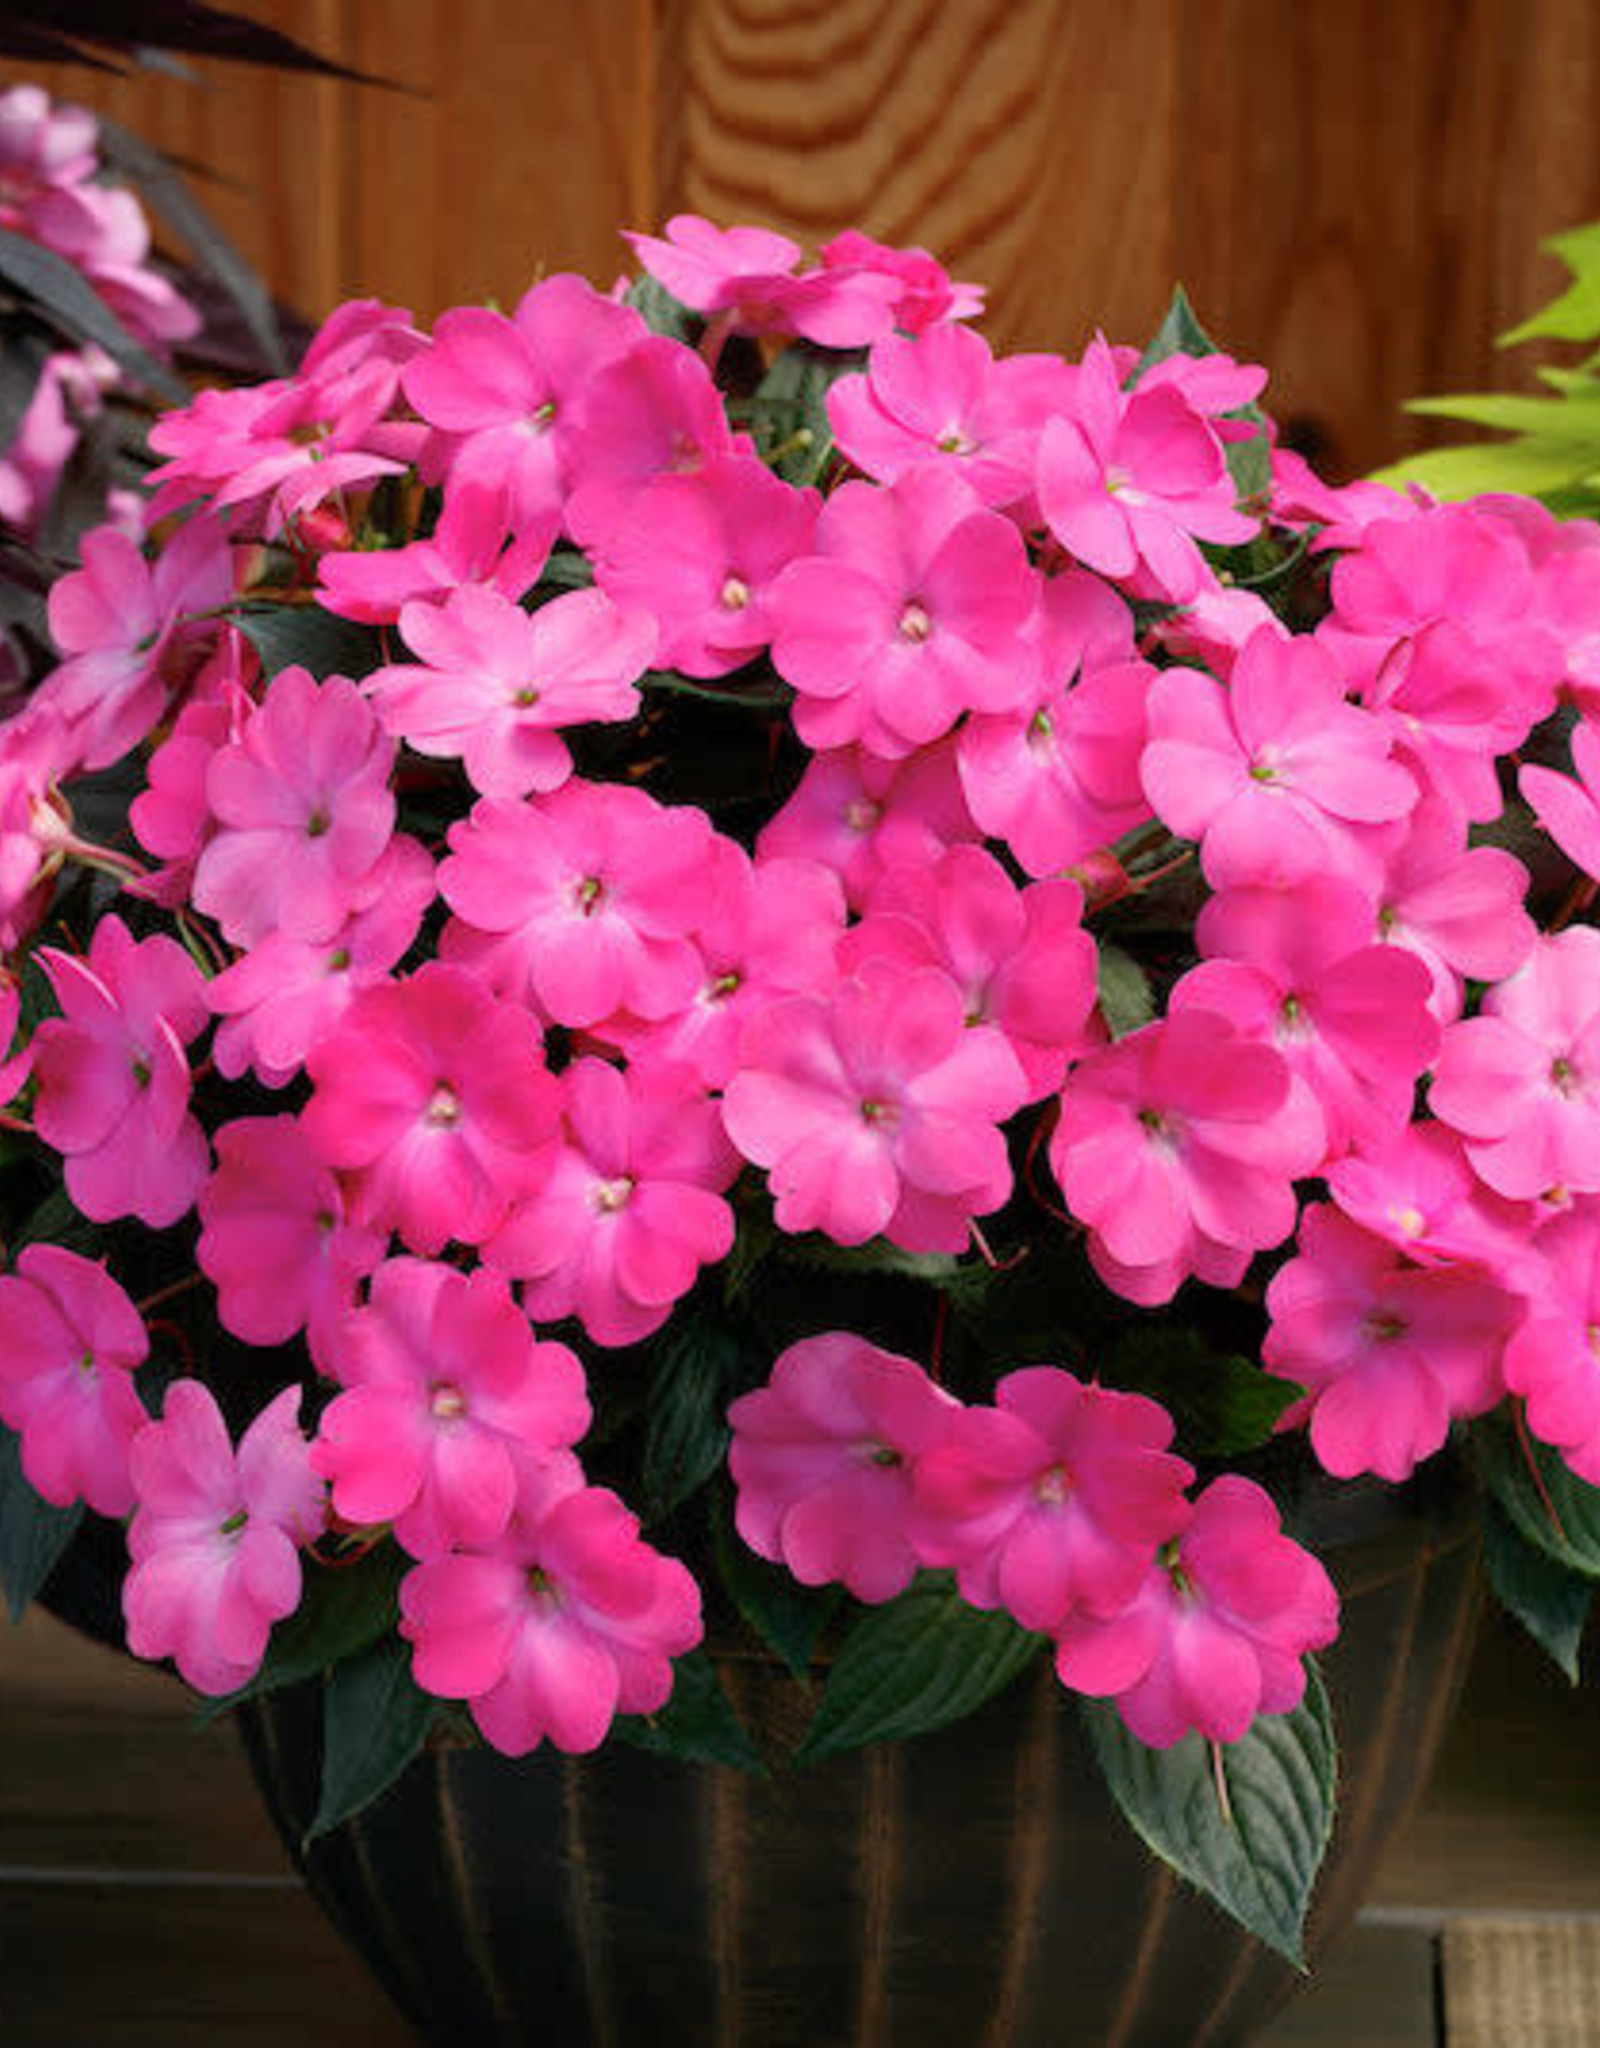 Seasonal Annuals: 5" Pot: Sunpatiens Compact Hot Pink